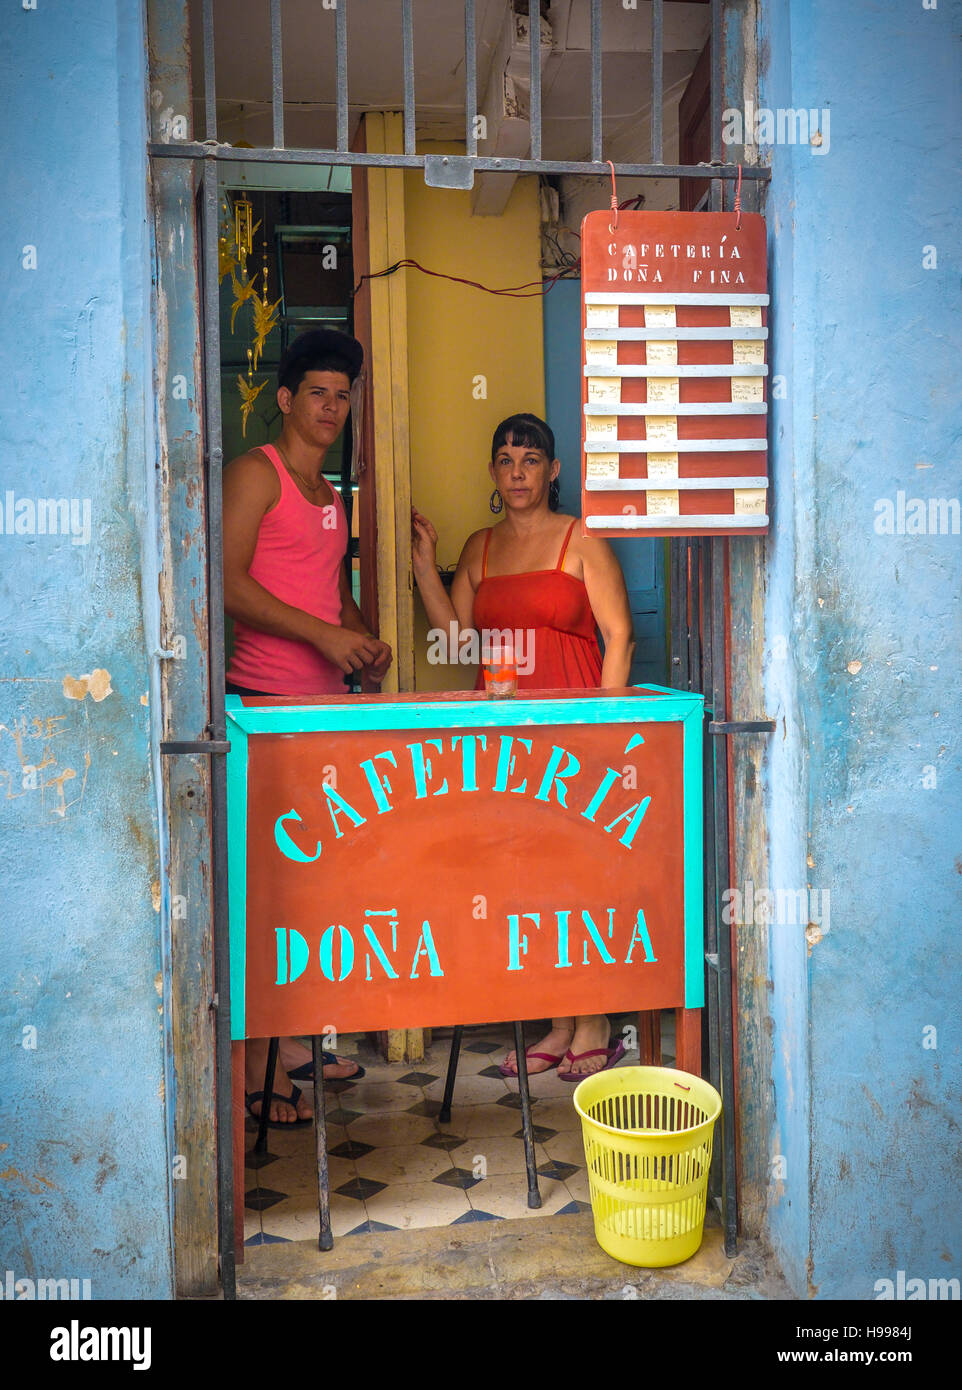 L'Avana, Cuba: Street scene, Old Havana Foto Stock